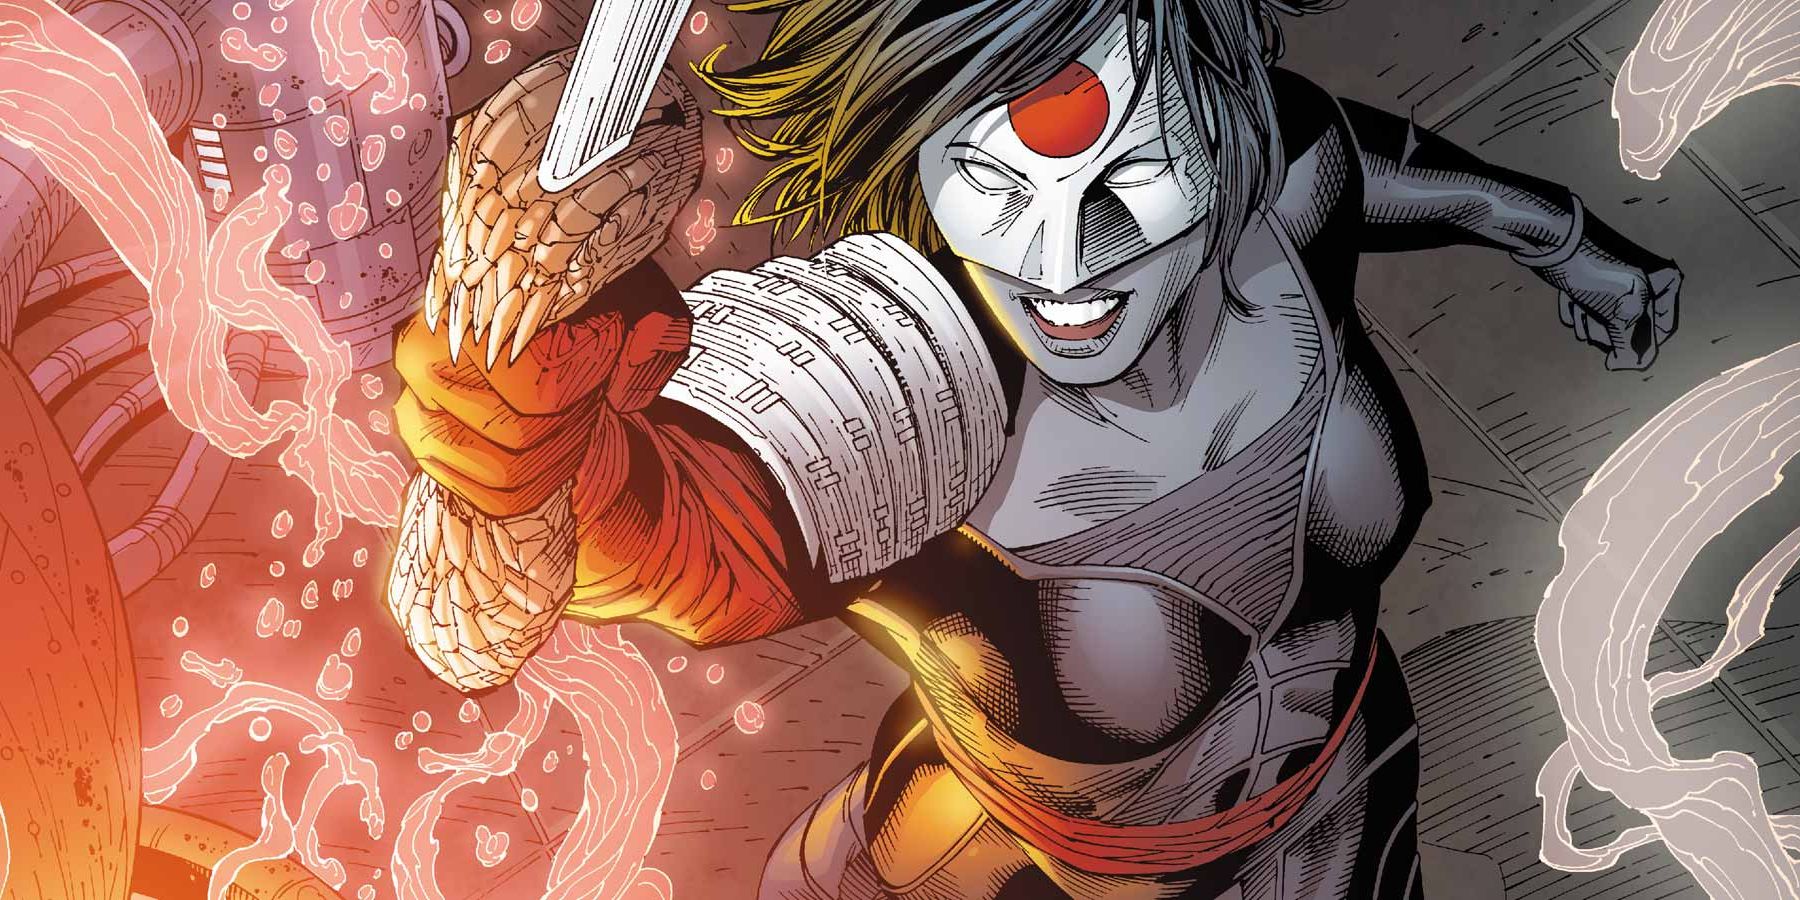 DC Comics' Katana fights with mystical power and a magic sword